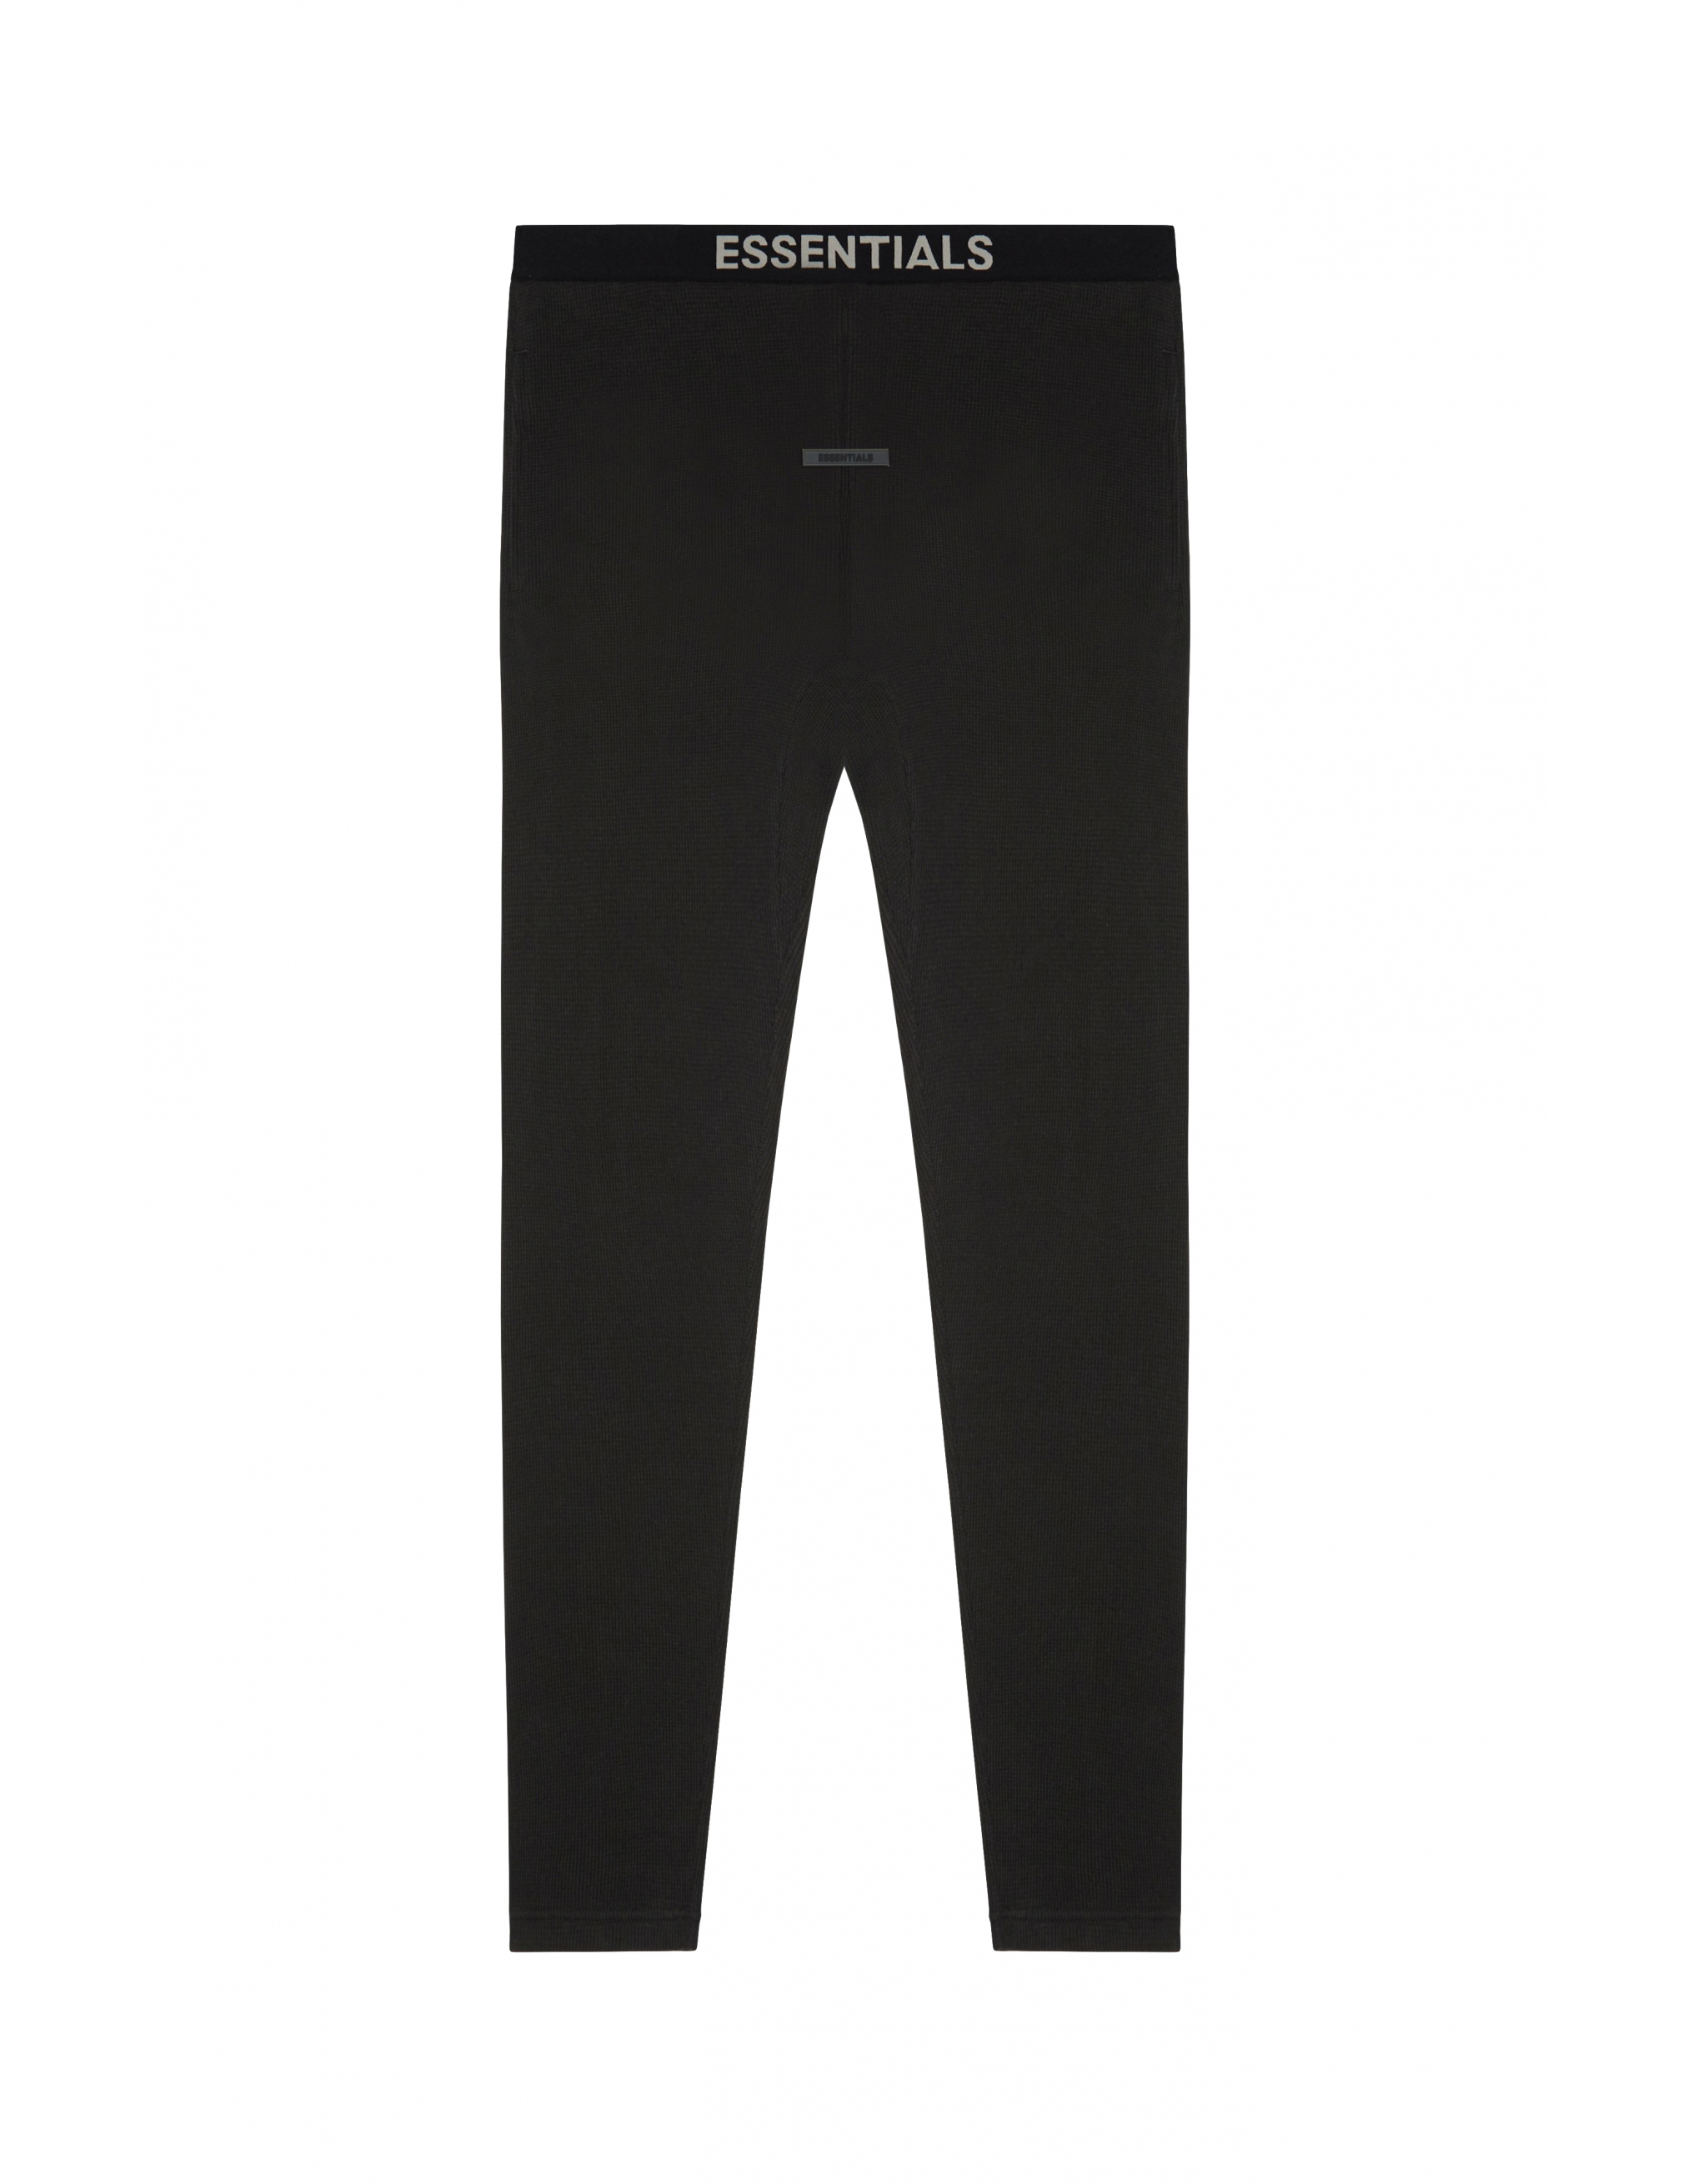 Черные термо брюки на резинке Fear of God Essentials 130SU212040F, размер XXL;XL;L;M;S - фото 2